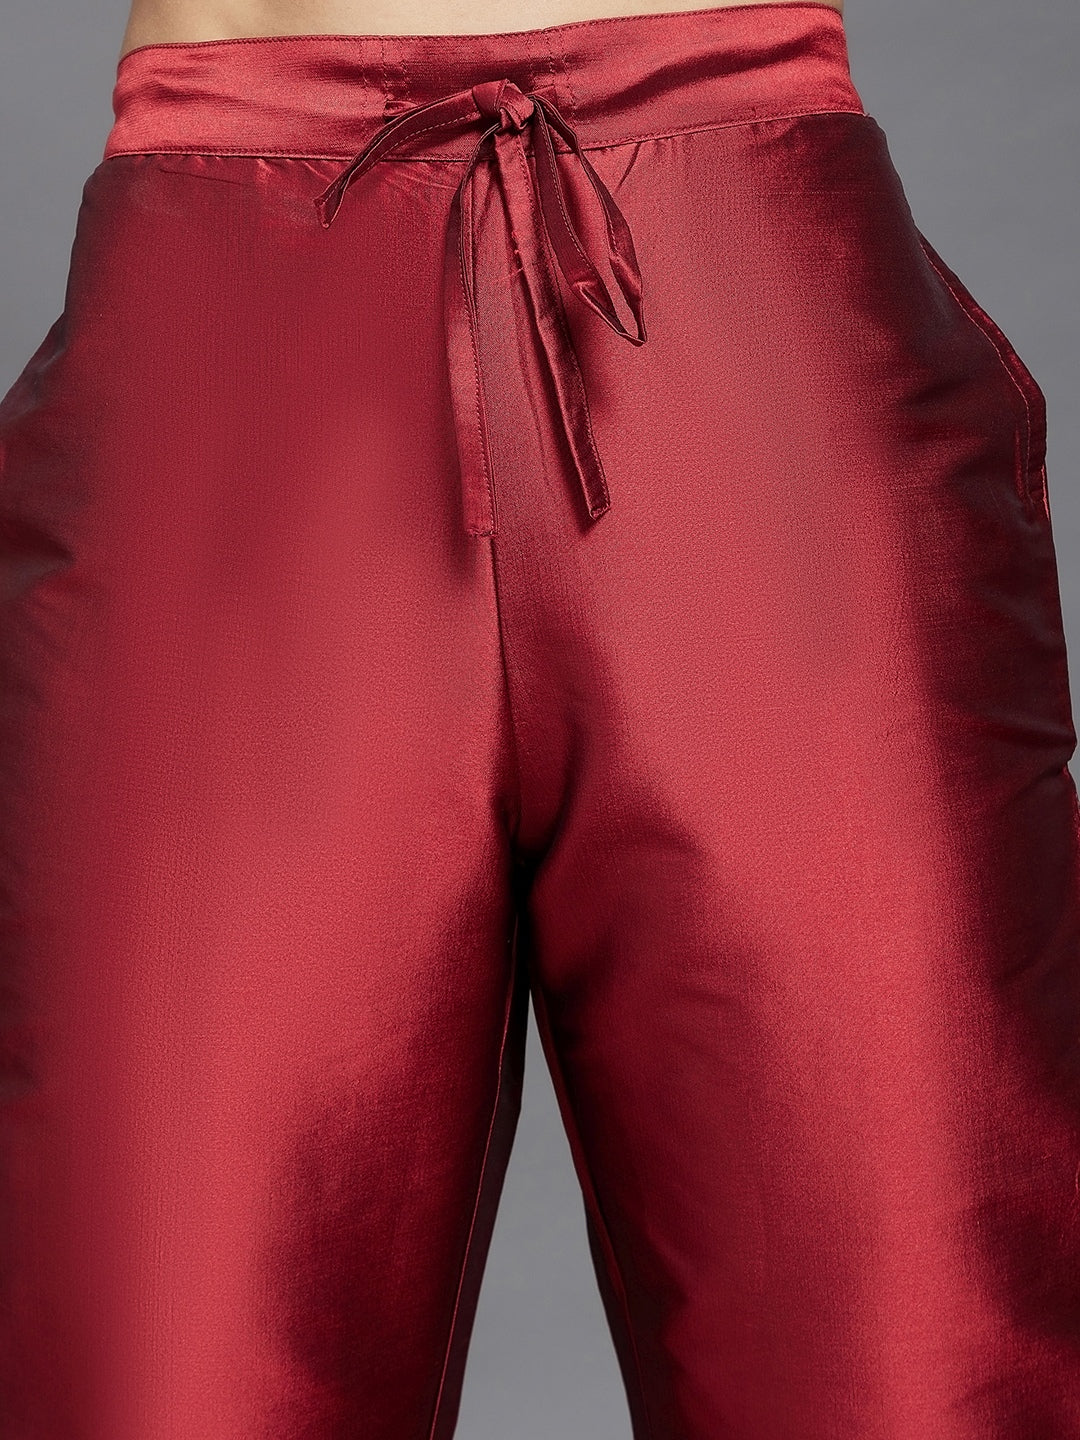 Women's Red And Gold Solid Side Slit Straight Kurta Palazzo And Dupatta Set - Azira